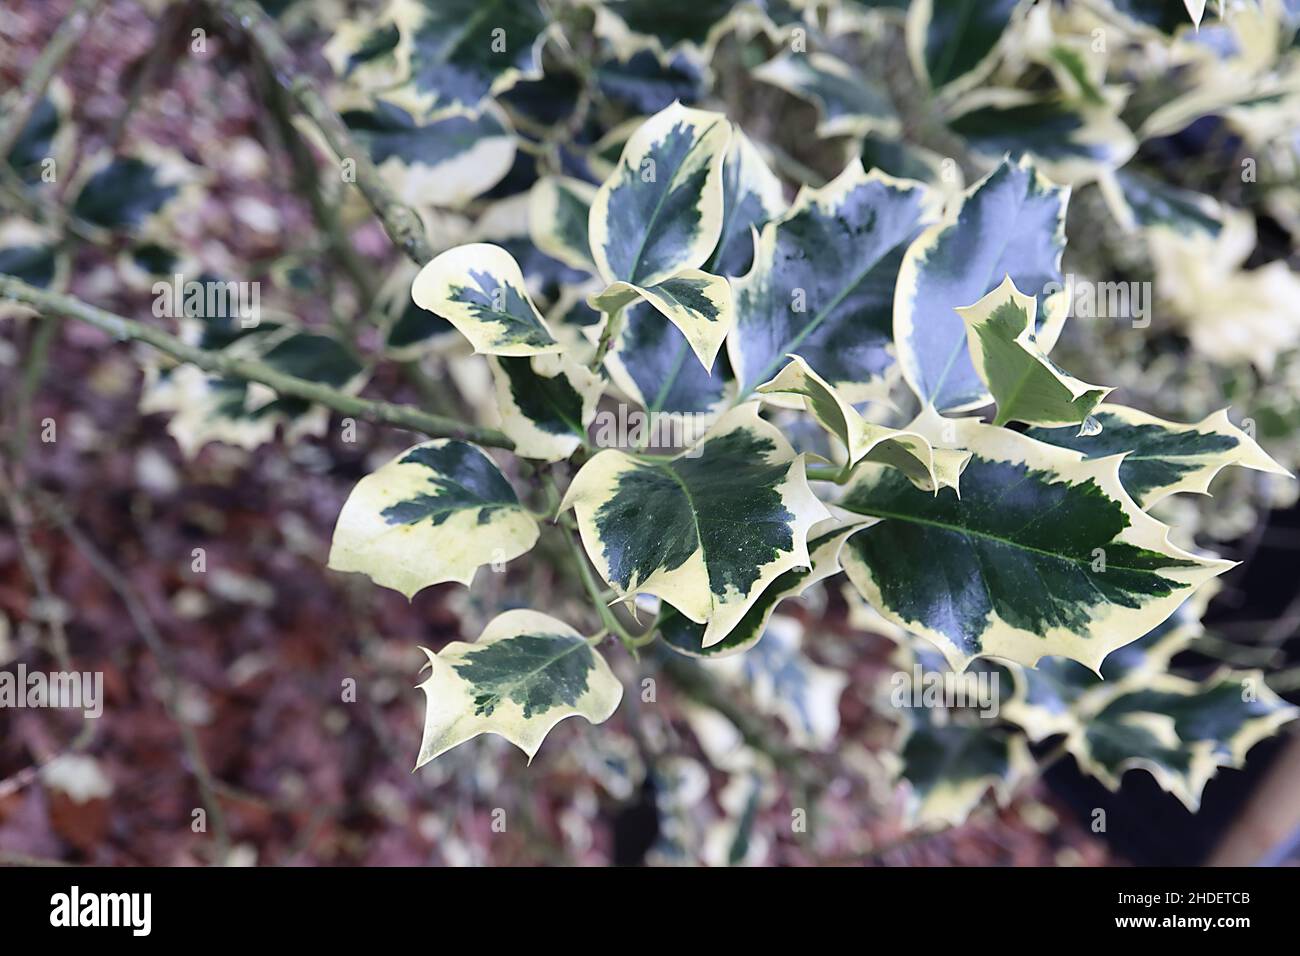 Ilex aquifolium ‘Golden Queen’ Holly Golden Queen - foglie di verde scuro, costola verde pallido e margini di crema spiky, gennaio, Inghilterra, Regno Unito Foto Stock